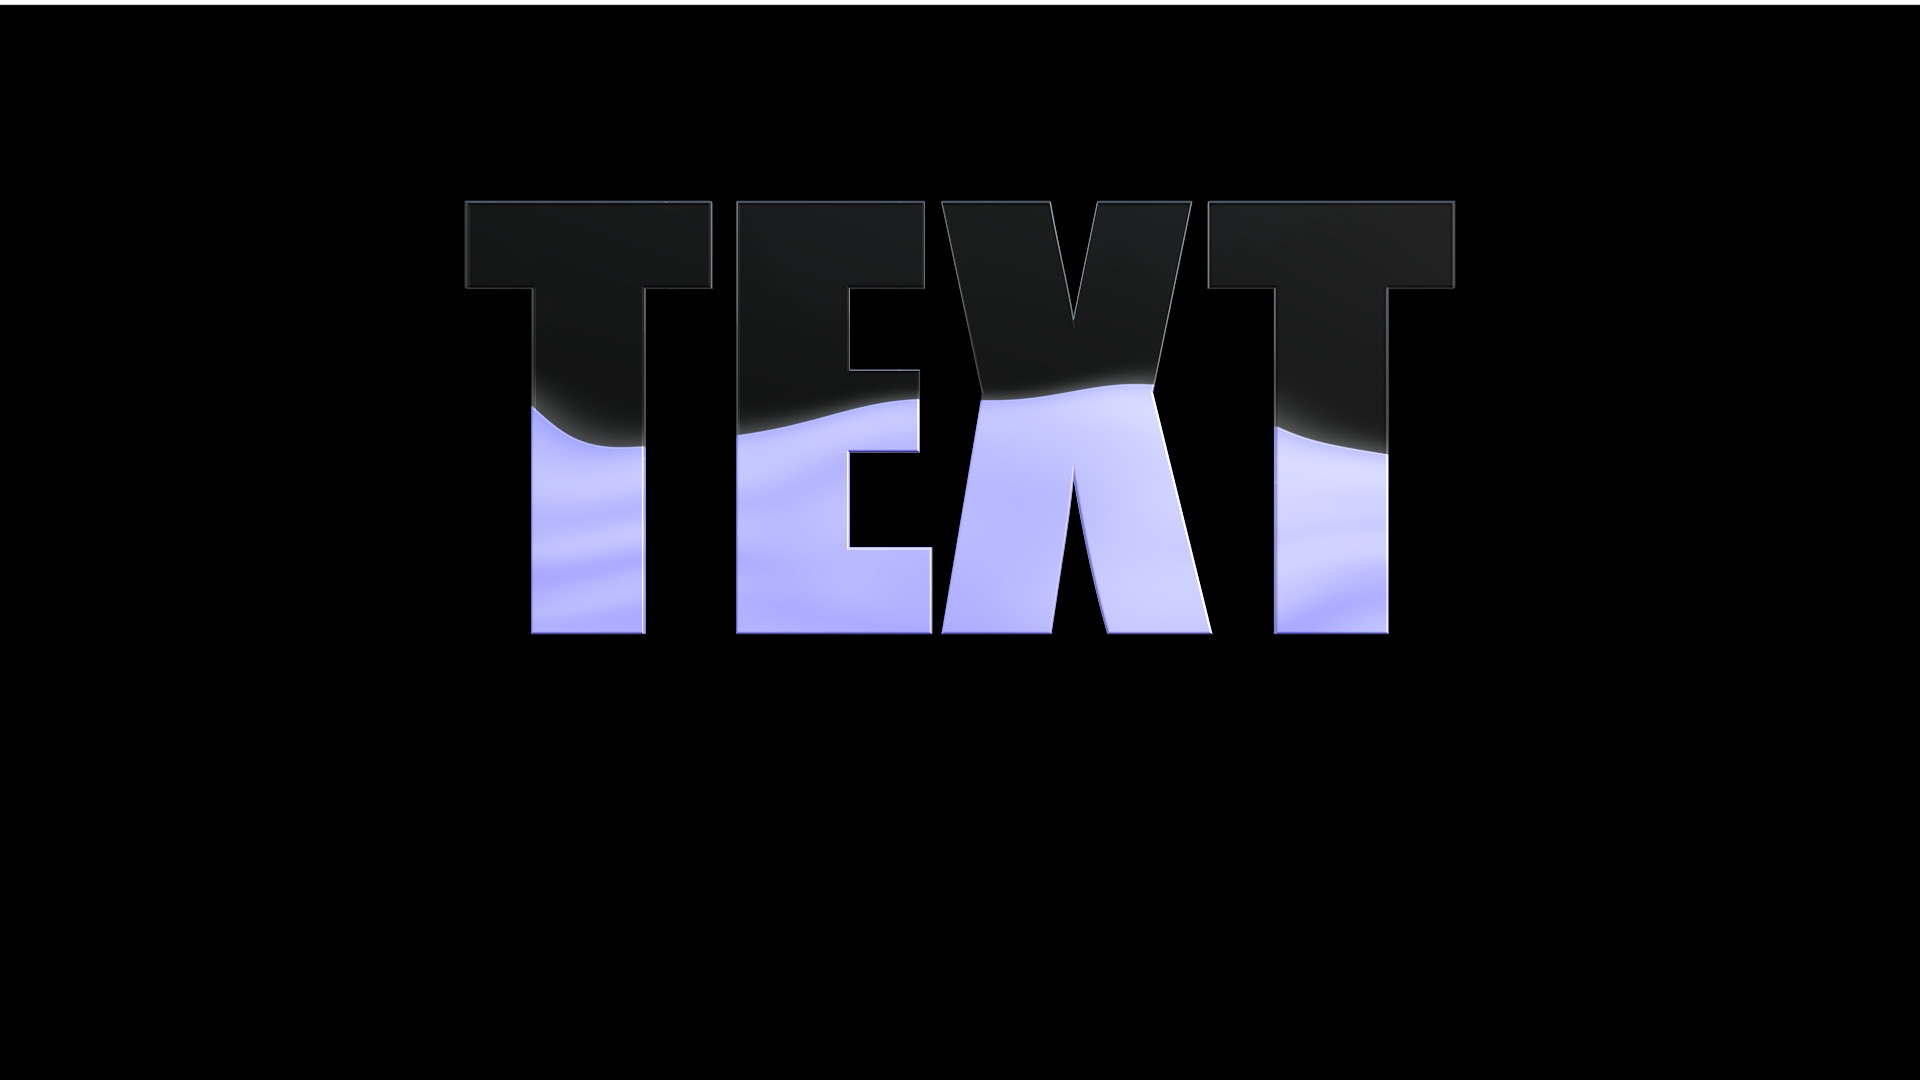 Liquid Fill Text Animated Texture